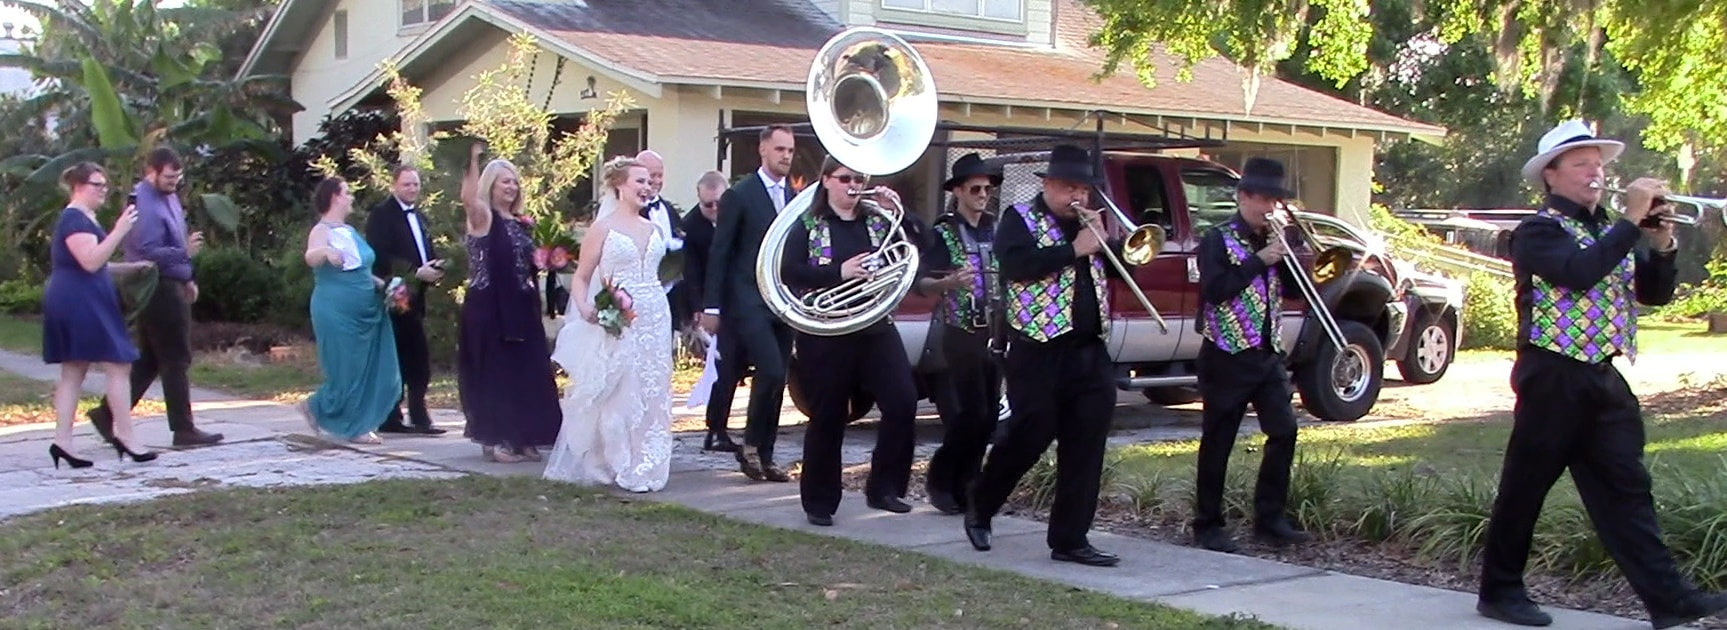 Real Deal Brass Band, Second Line Band for wedding, Vero Beach, Daytona Beach, Cocoa Beach, Fl.